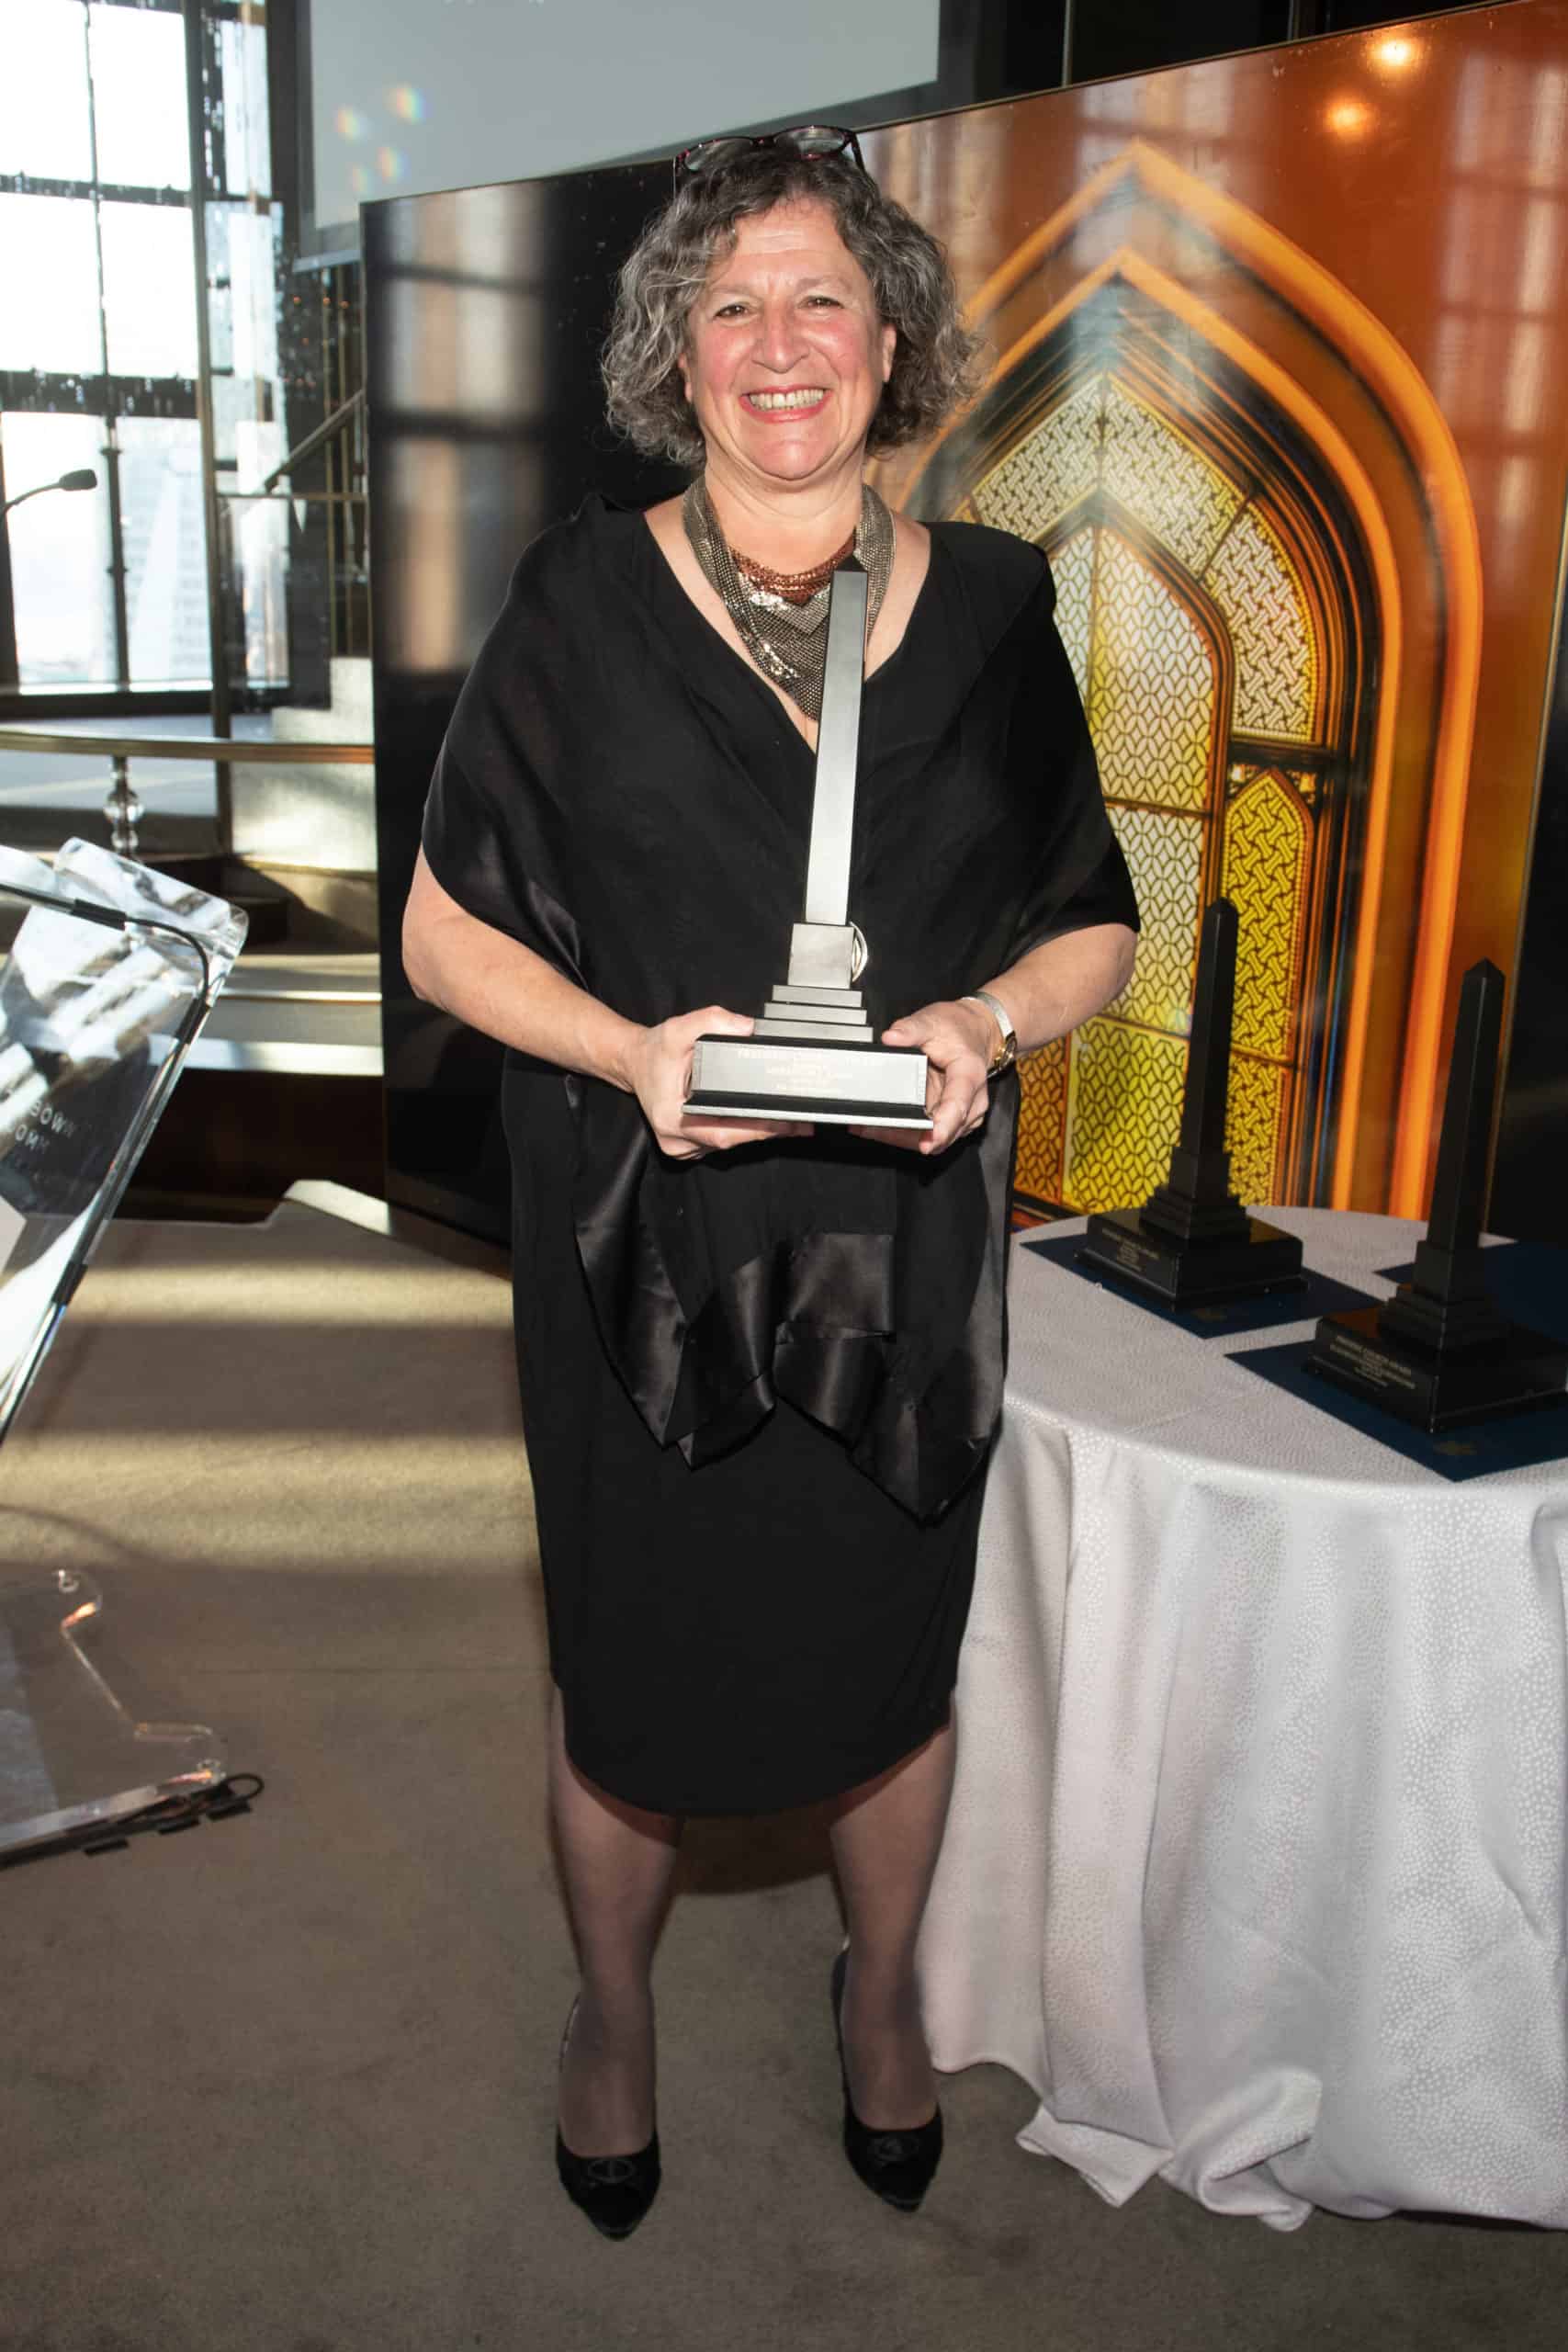 Frederic Church Award Gala Honoring Meredith J. Kane, Elizabeth Mankin Kornhauser And Jean Shin